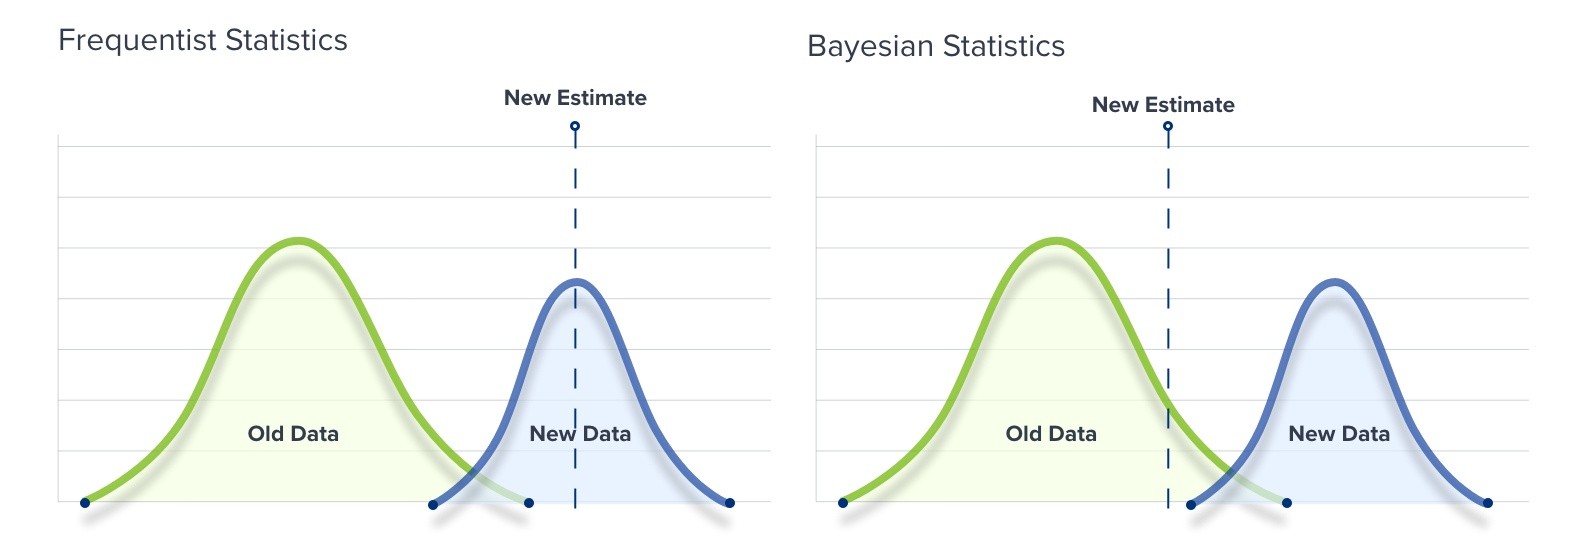 frequentist bayesian statistics